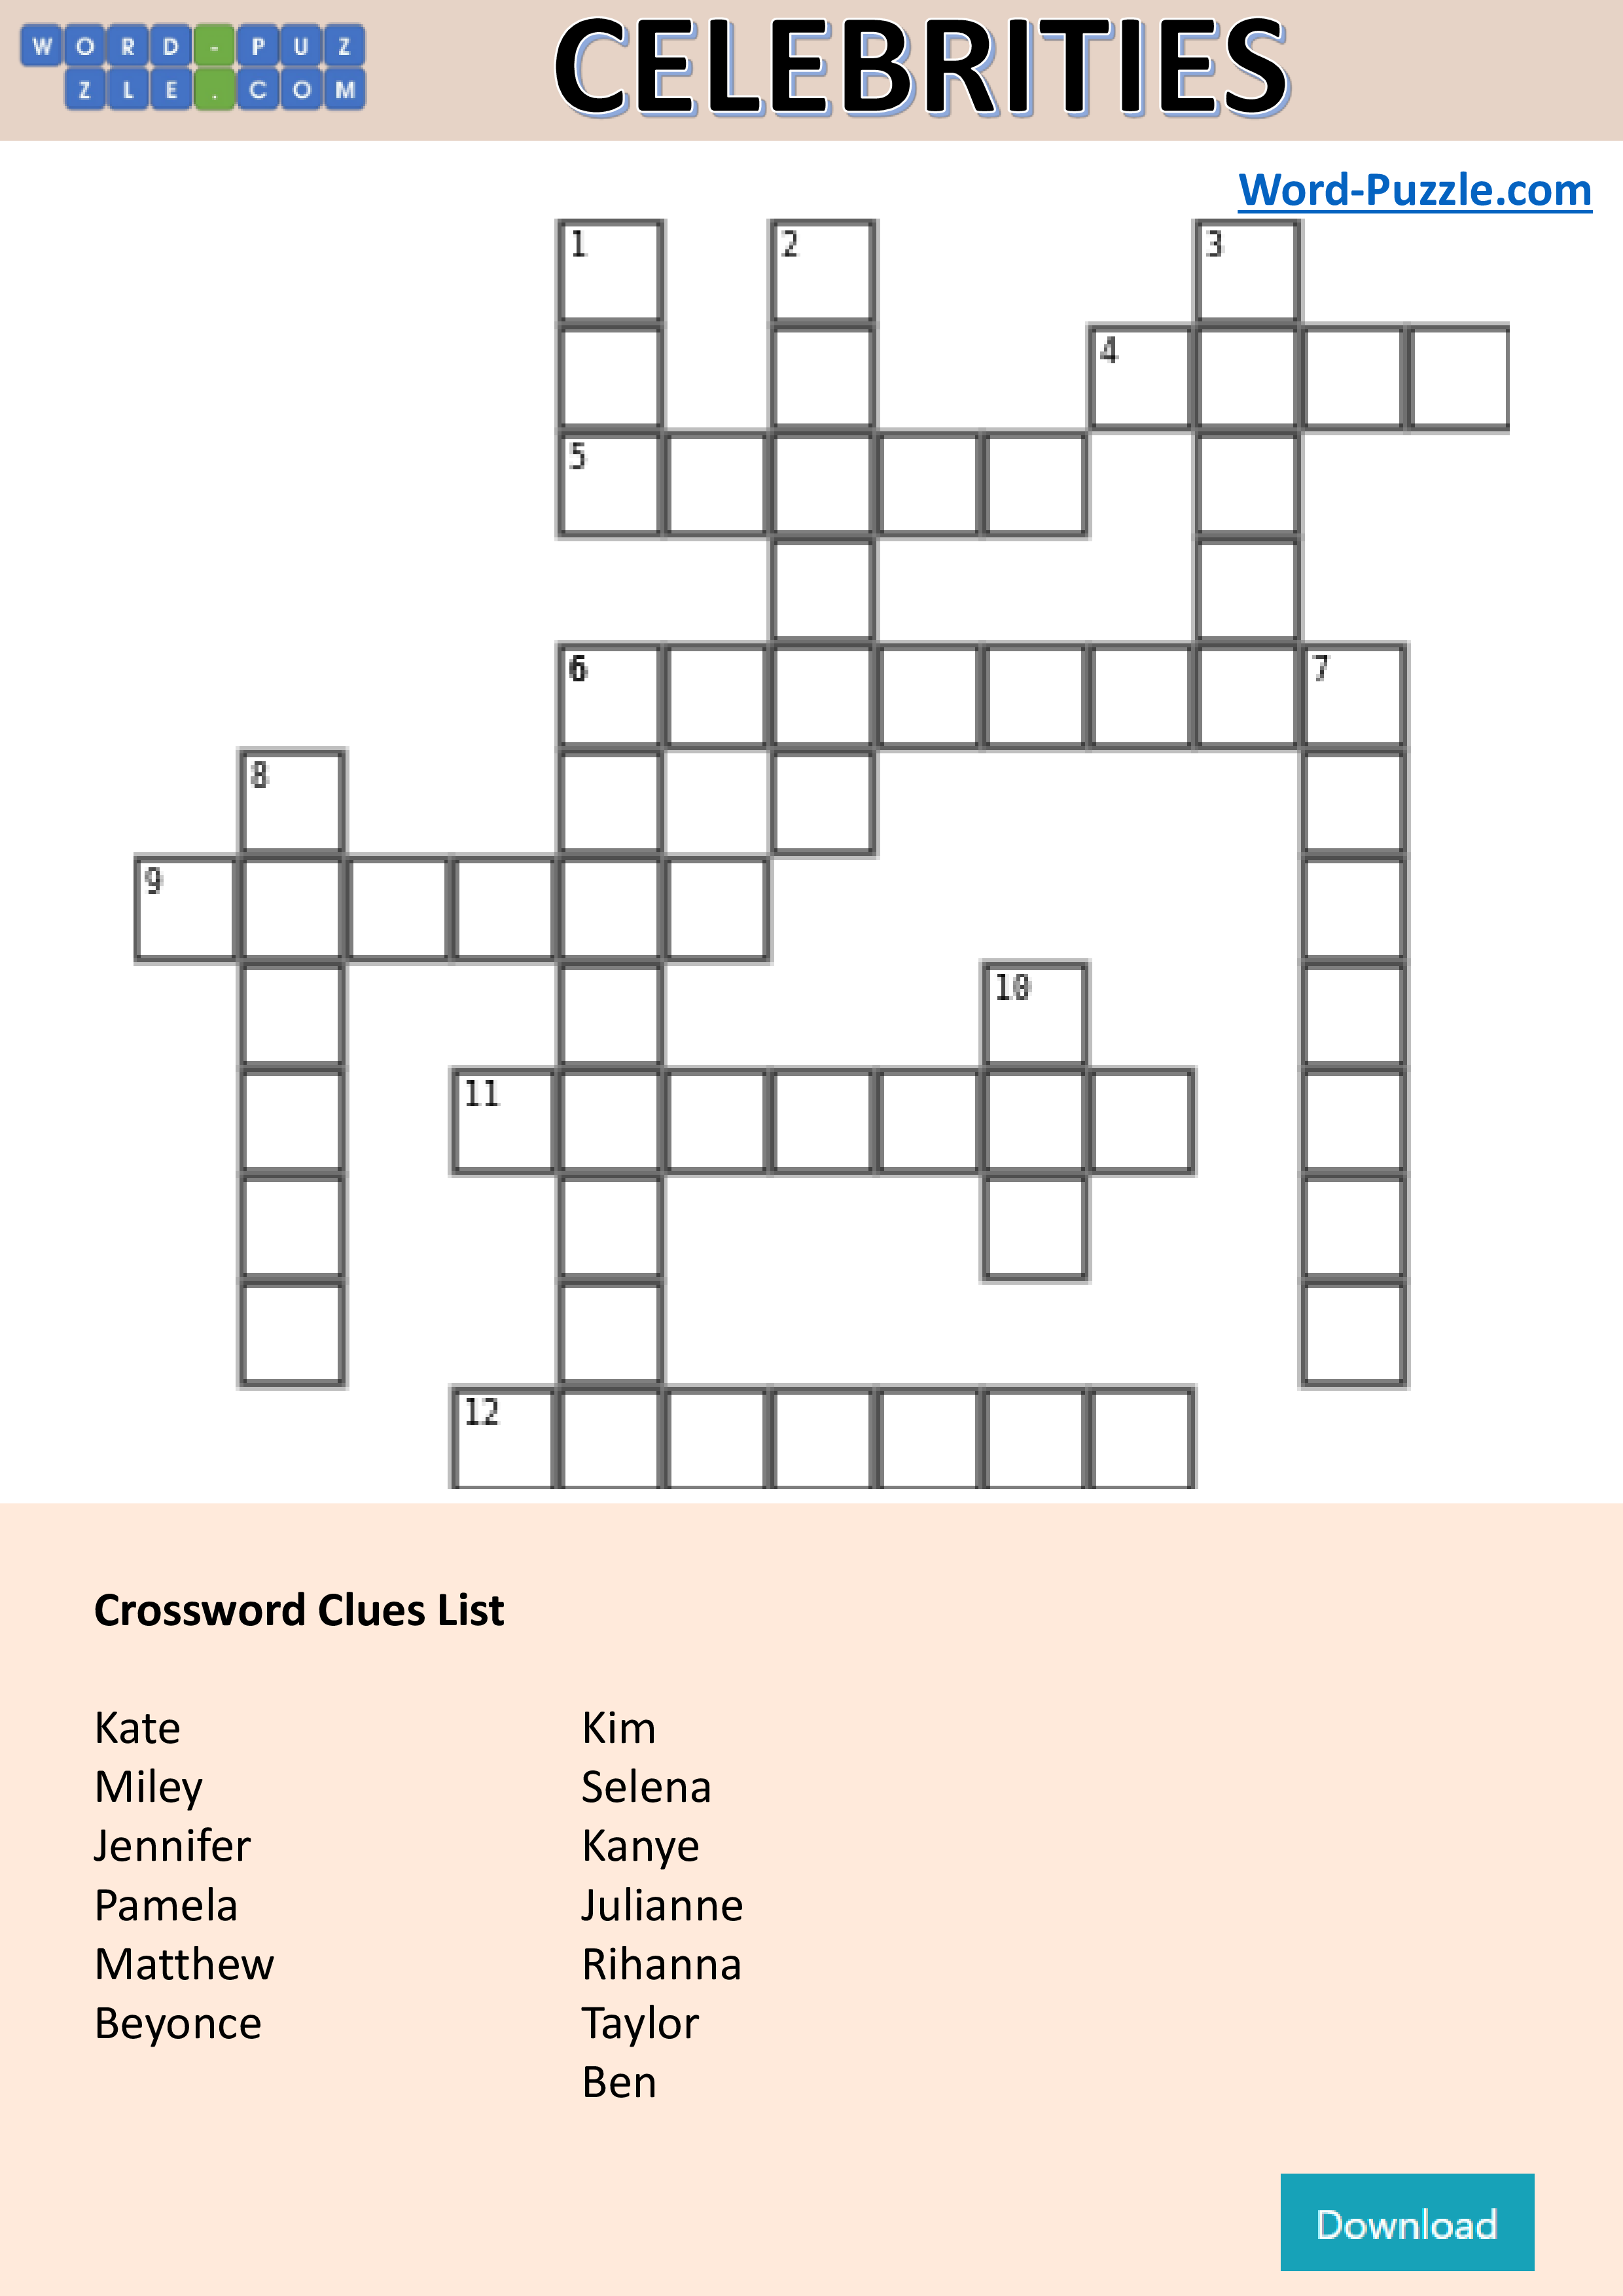 Celebrity Crossword Puzzle main image